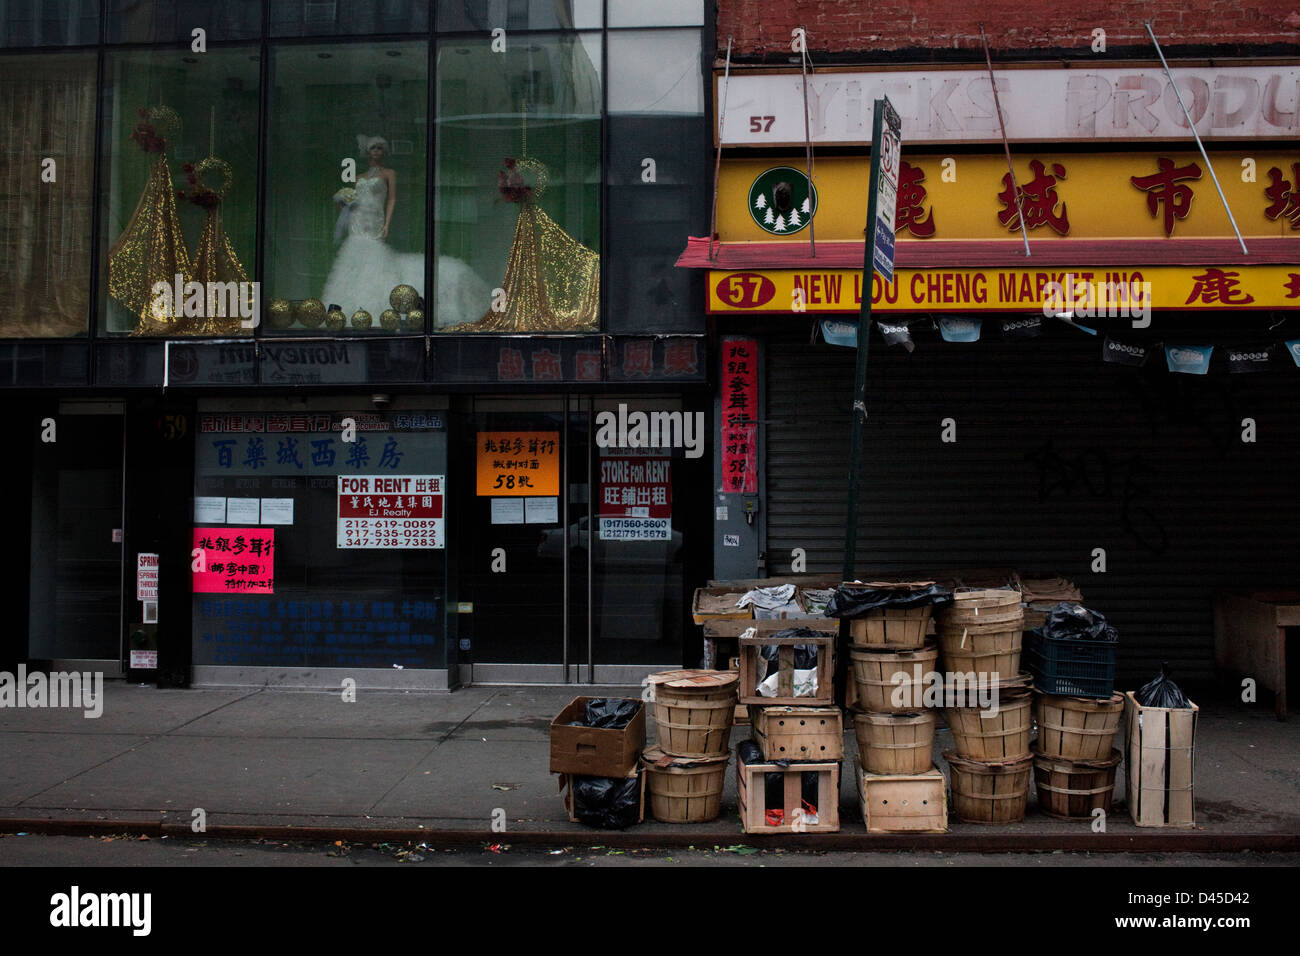 NYC Chinatown Sandy aftermath Stock Photo